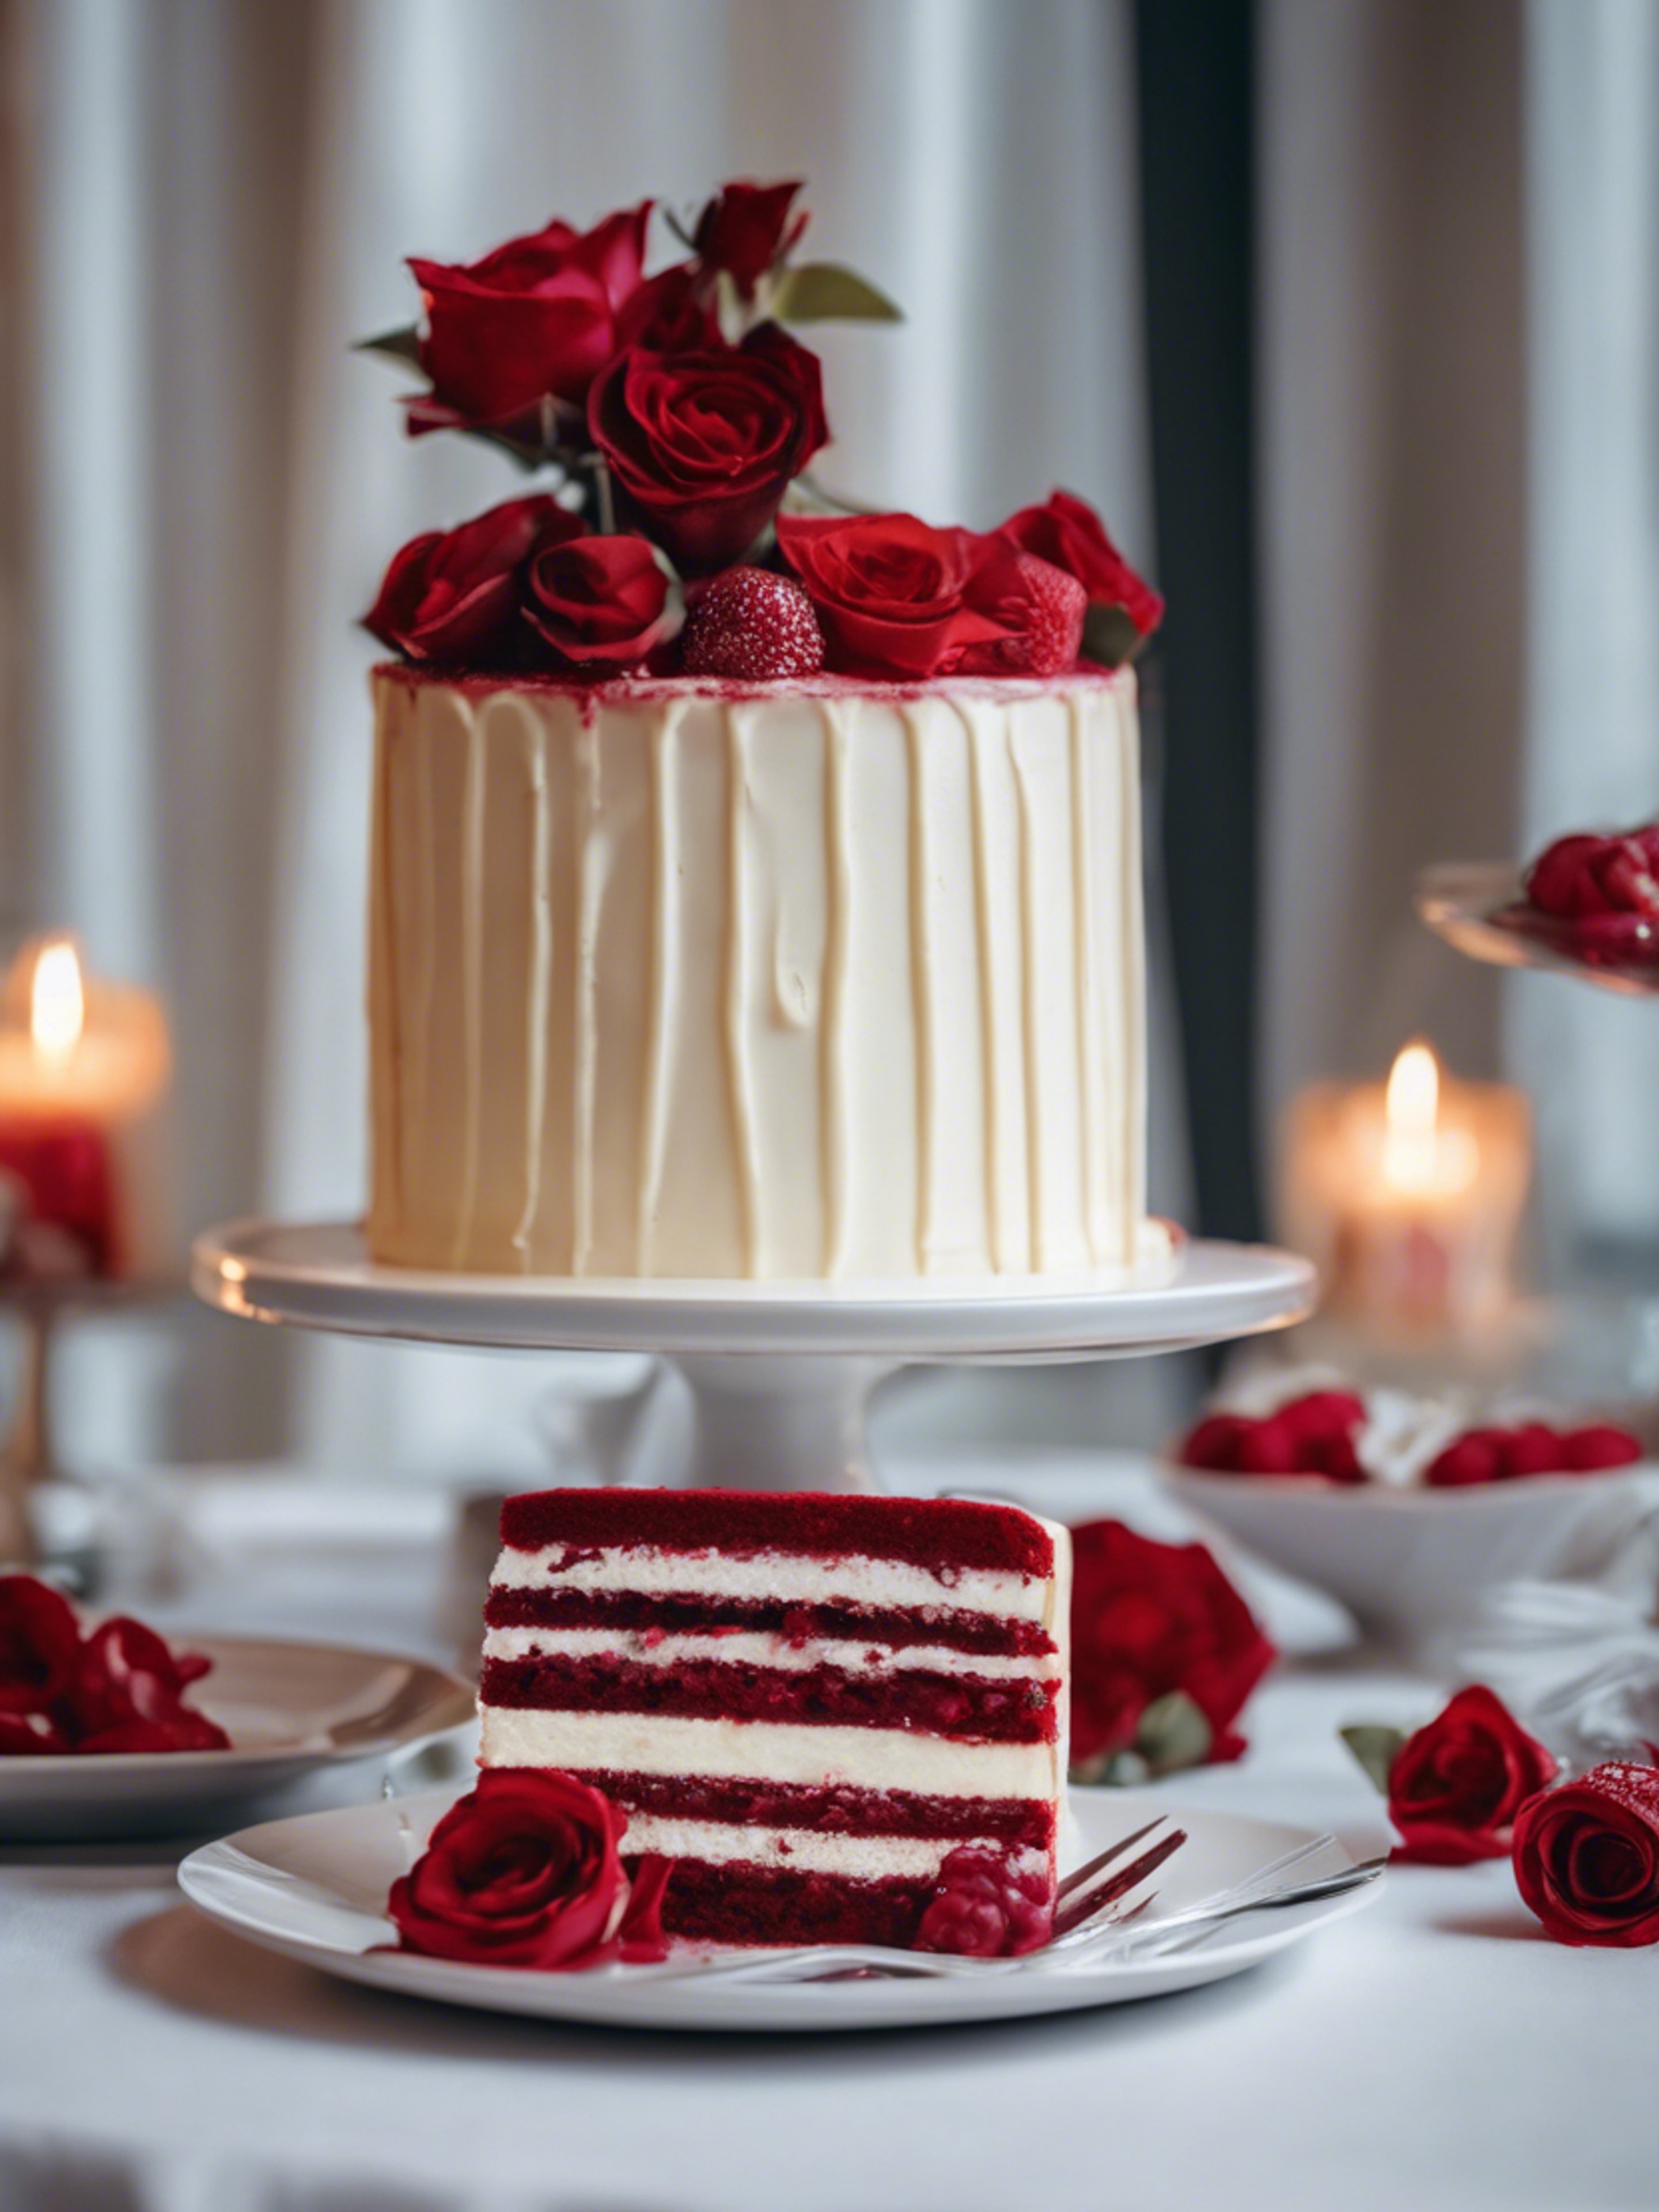 A scrumptious red velvet and white cream layered cake on a dessert table. Hintergrund[9c378ca78b014f2daafb]